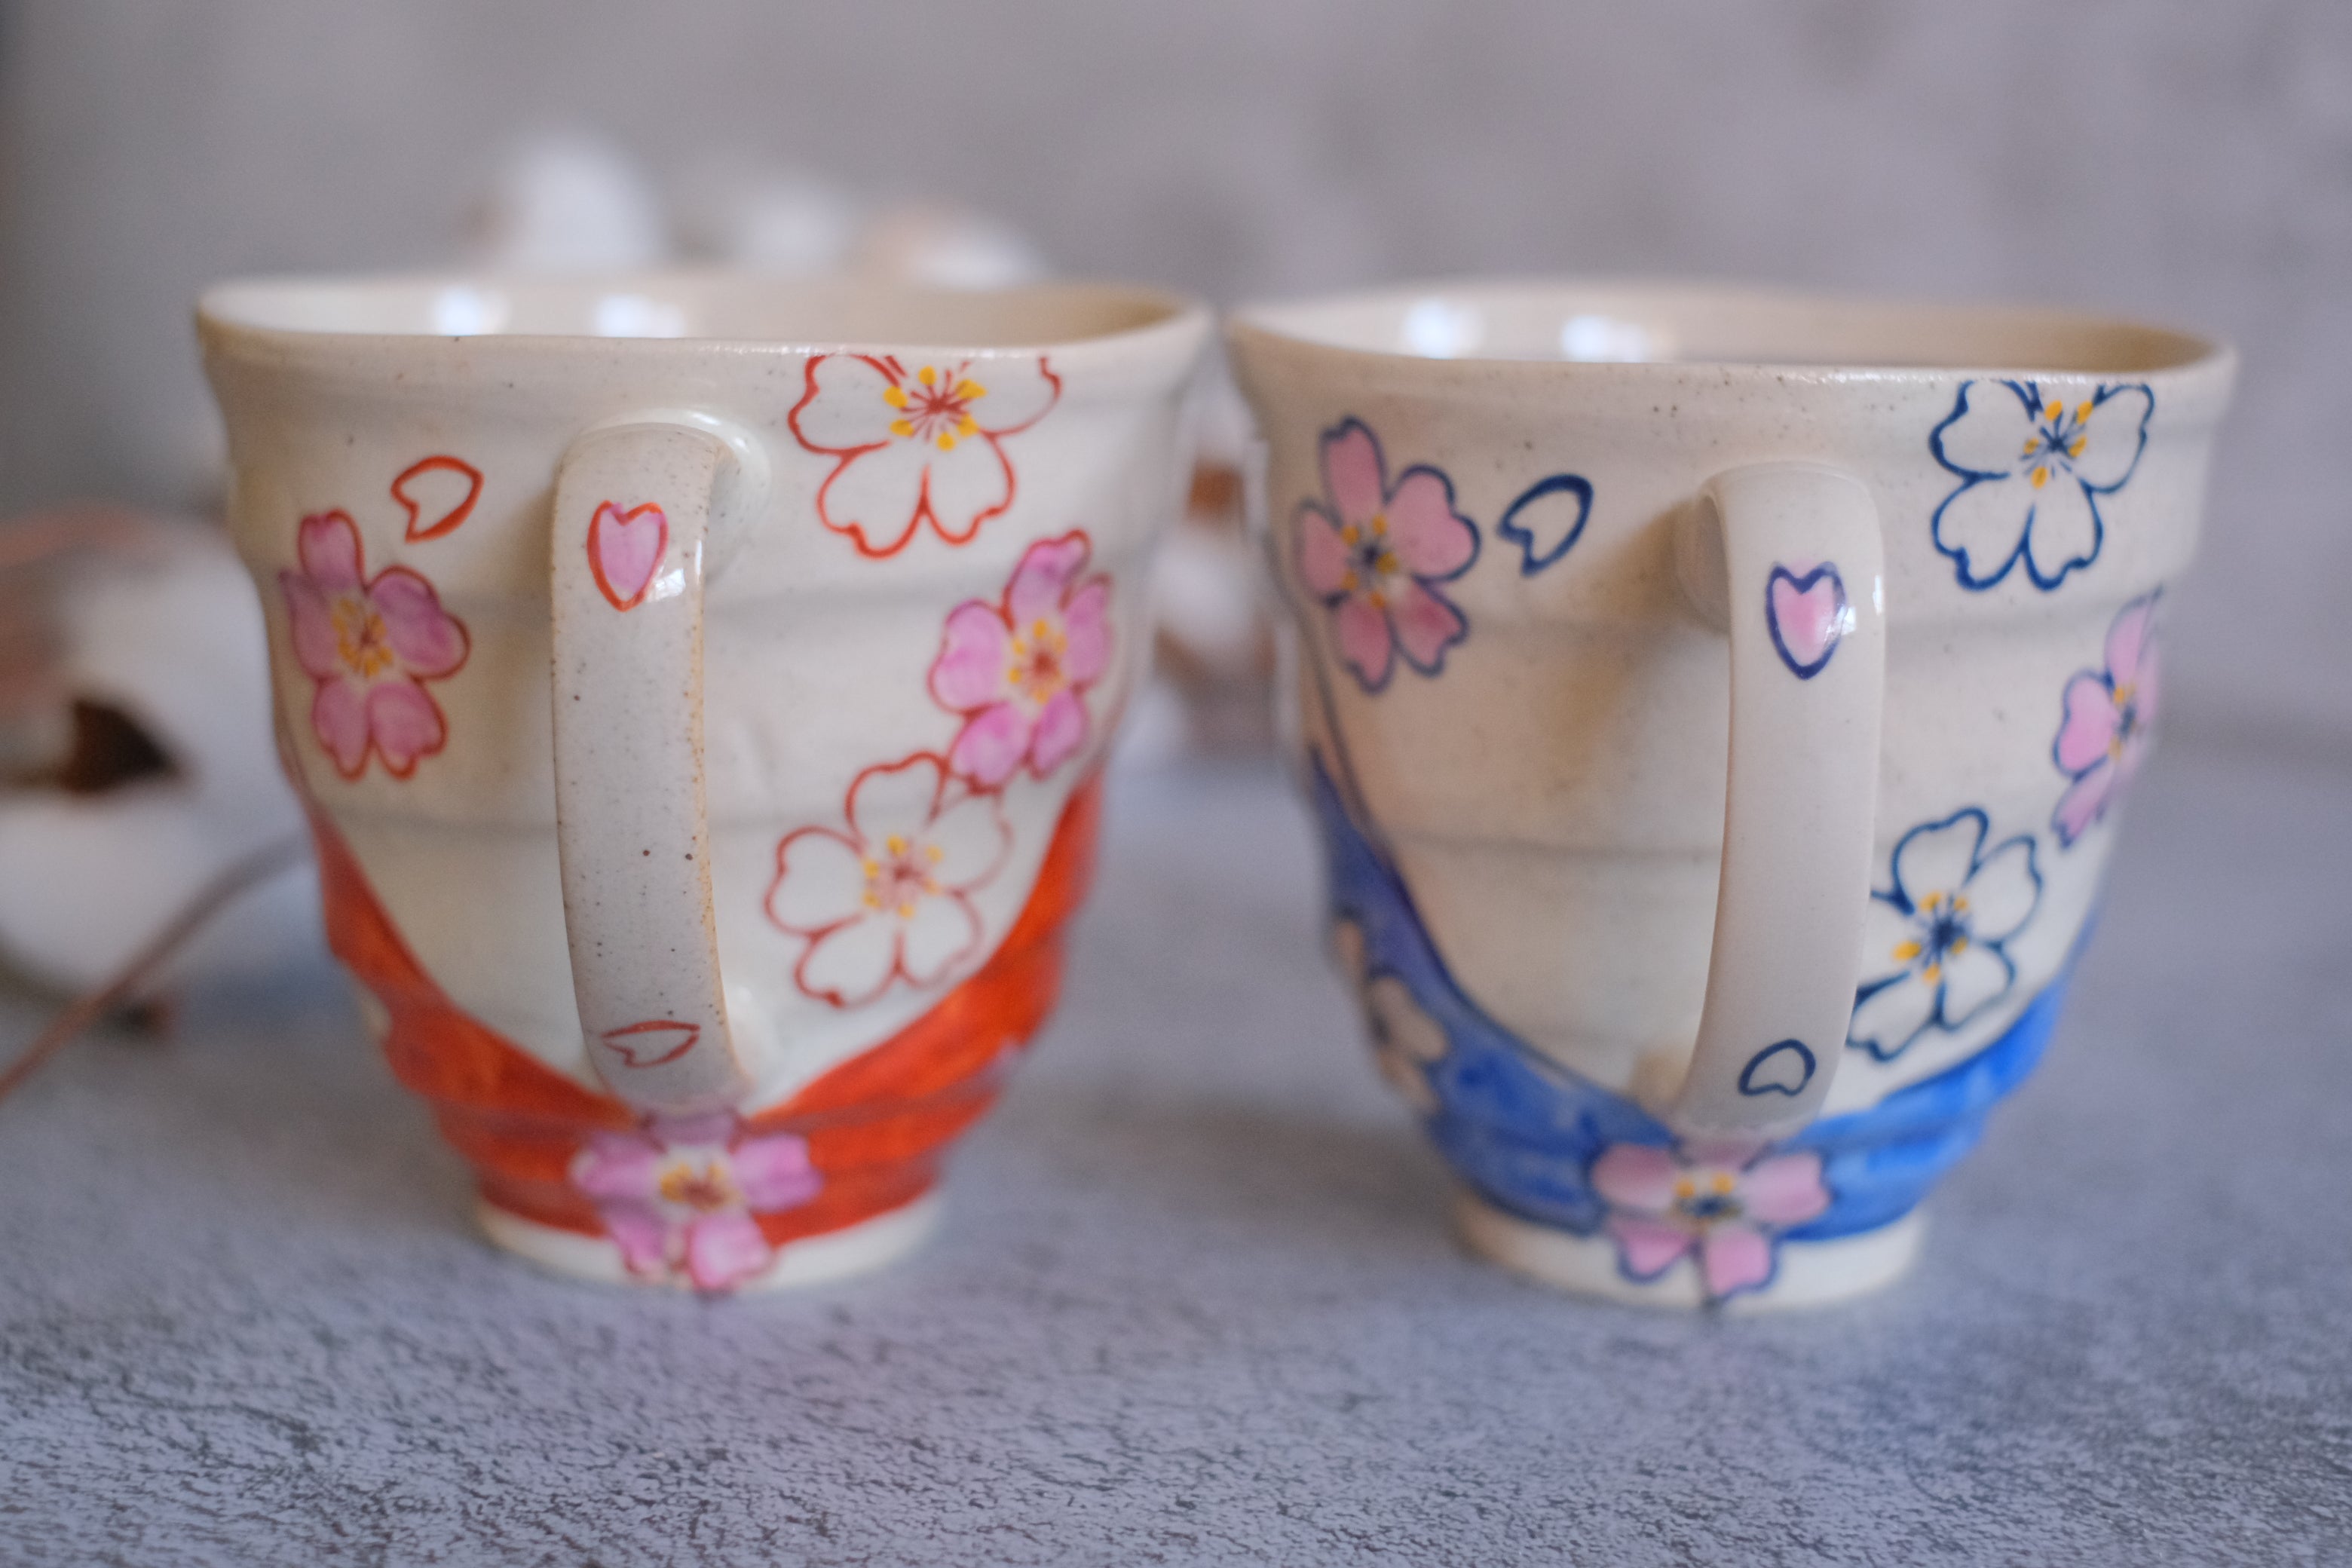 Minoyaki Red & Blue Sakura Fuji Handmade Pair Mugs